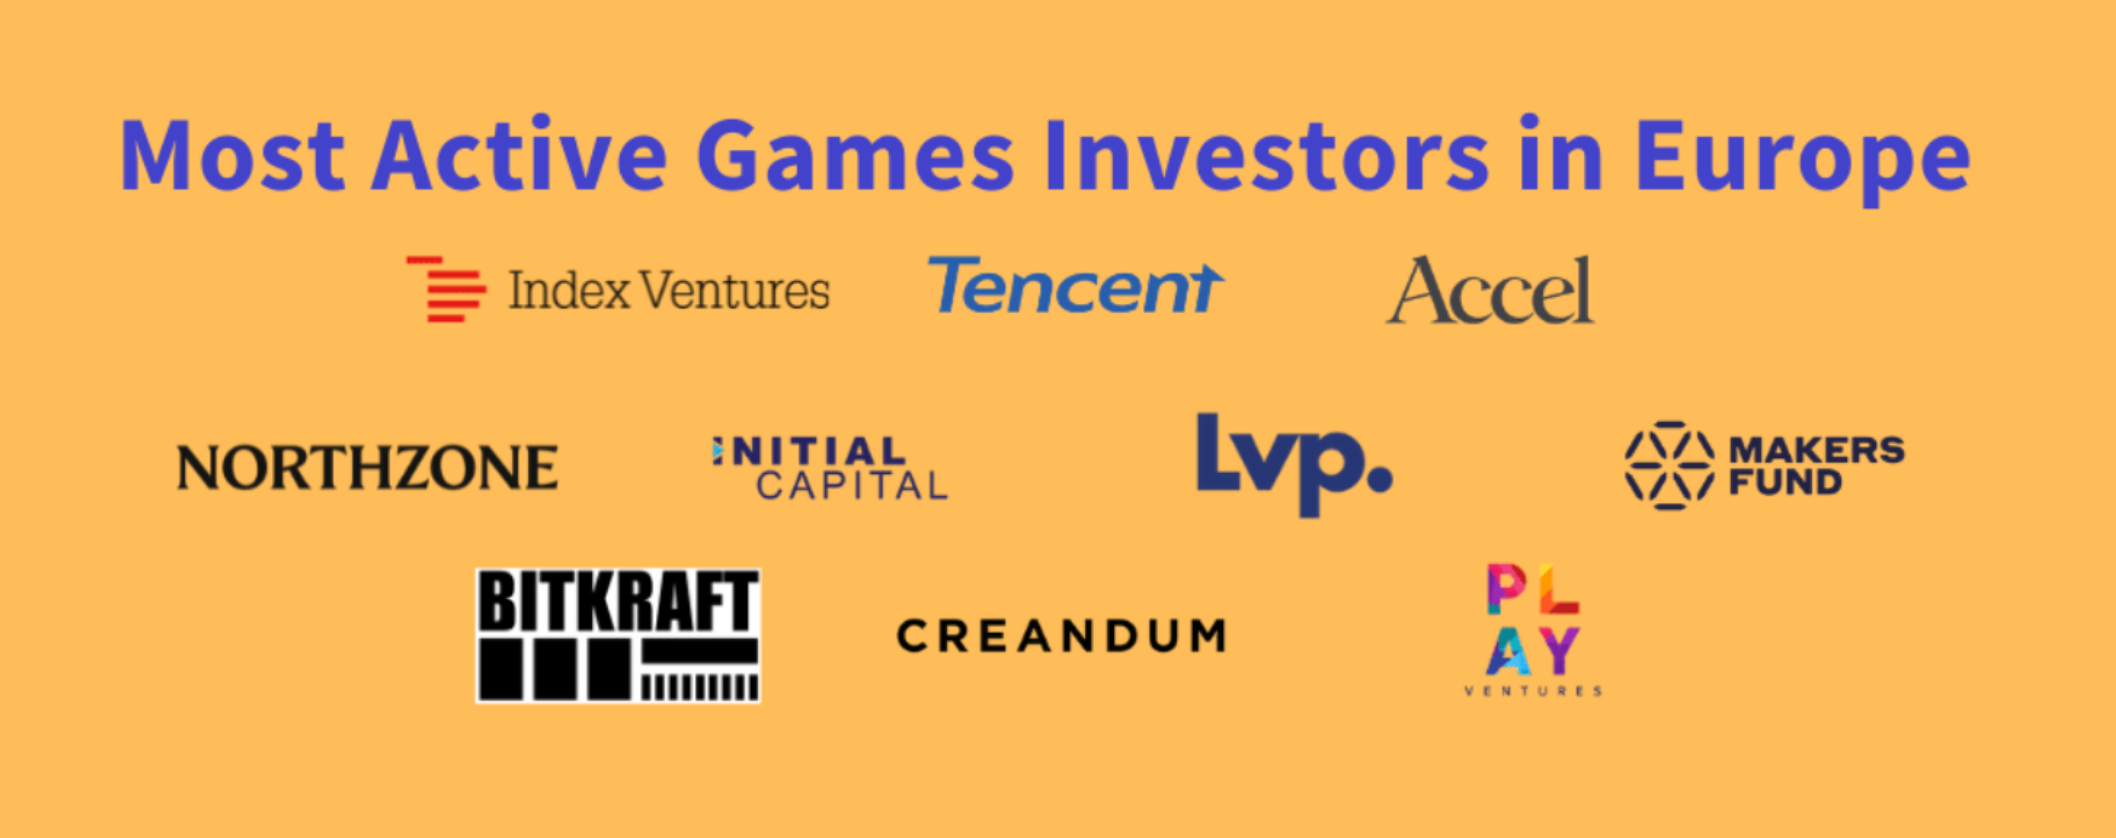 Top 10 most active games investors in Europe